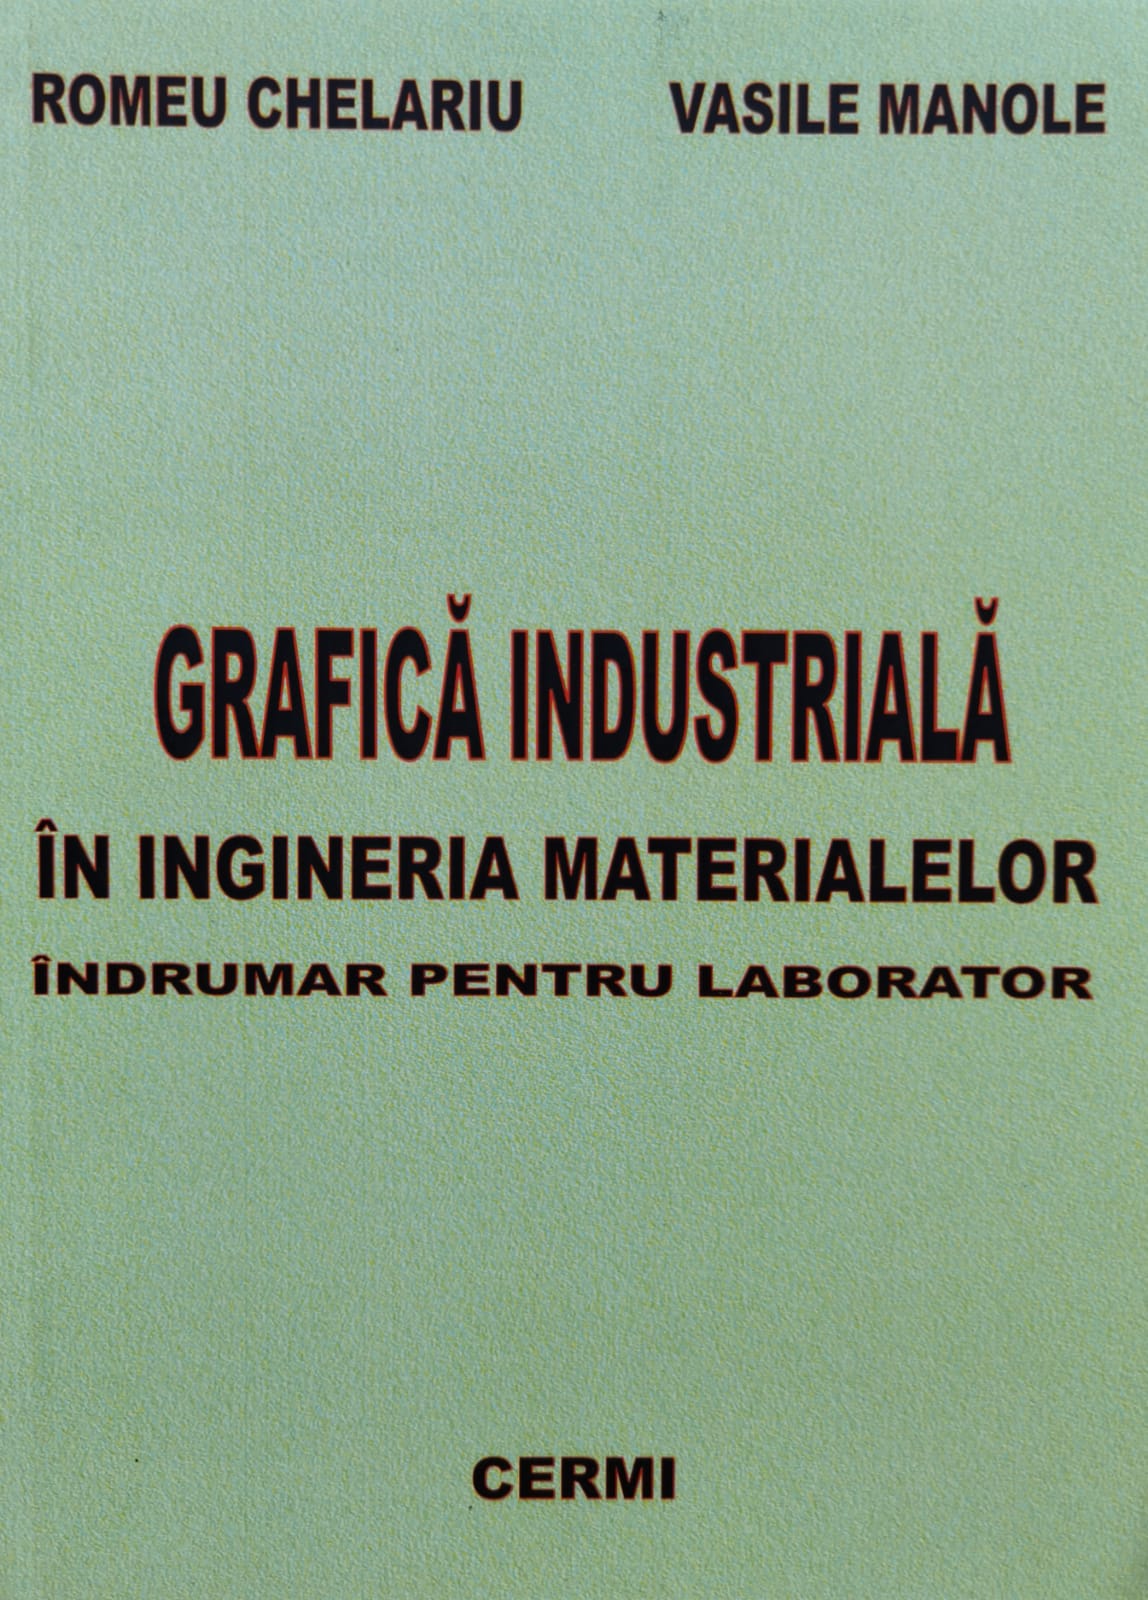 grafica industriala in ingineria materialelor                                                        romeu chelariu, vasile manole                                                                       